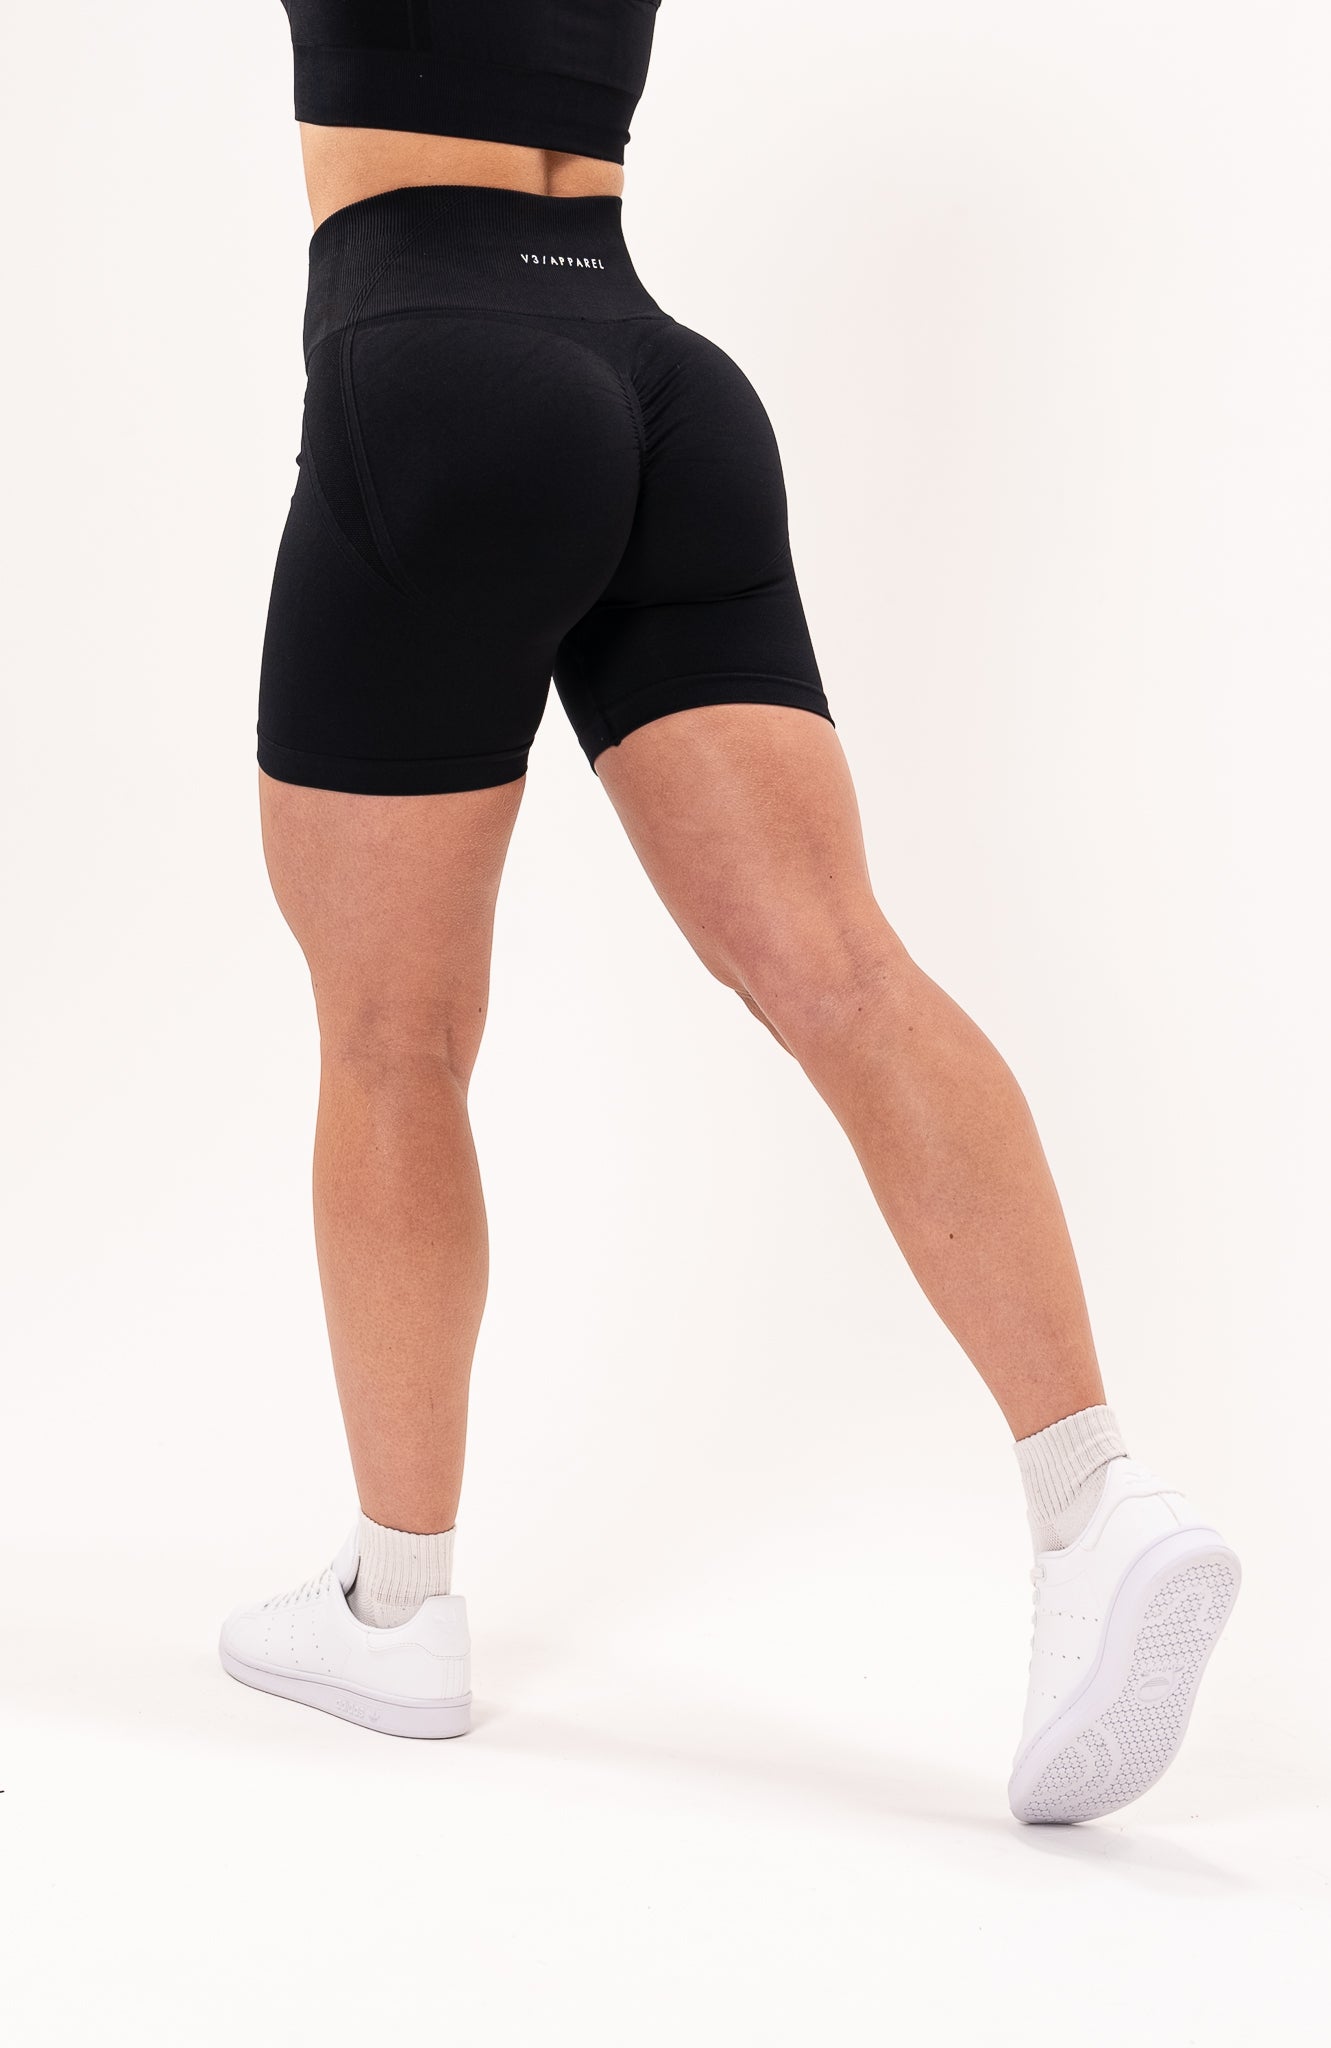 Best Selling Brazilian Scrunch Gym Shorts With deep back V design - Buy activewear  Shorts for women – Baller Babe Active Wear